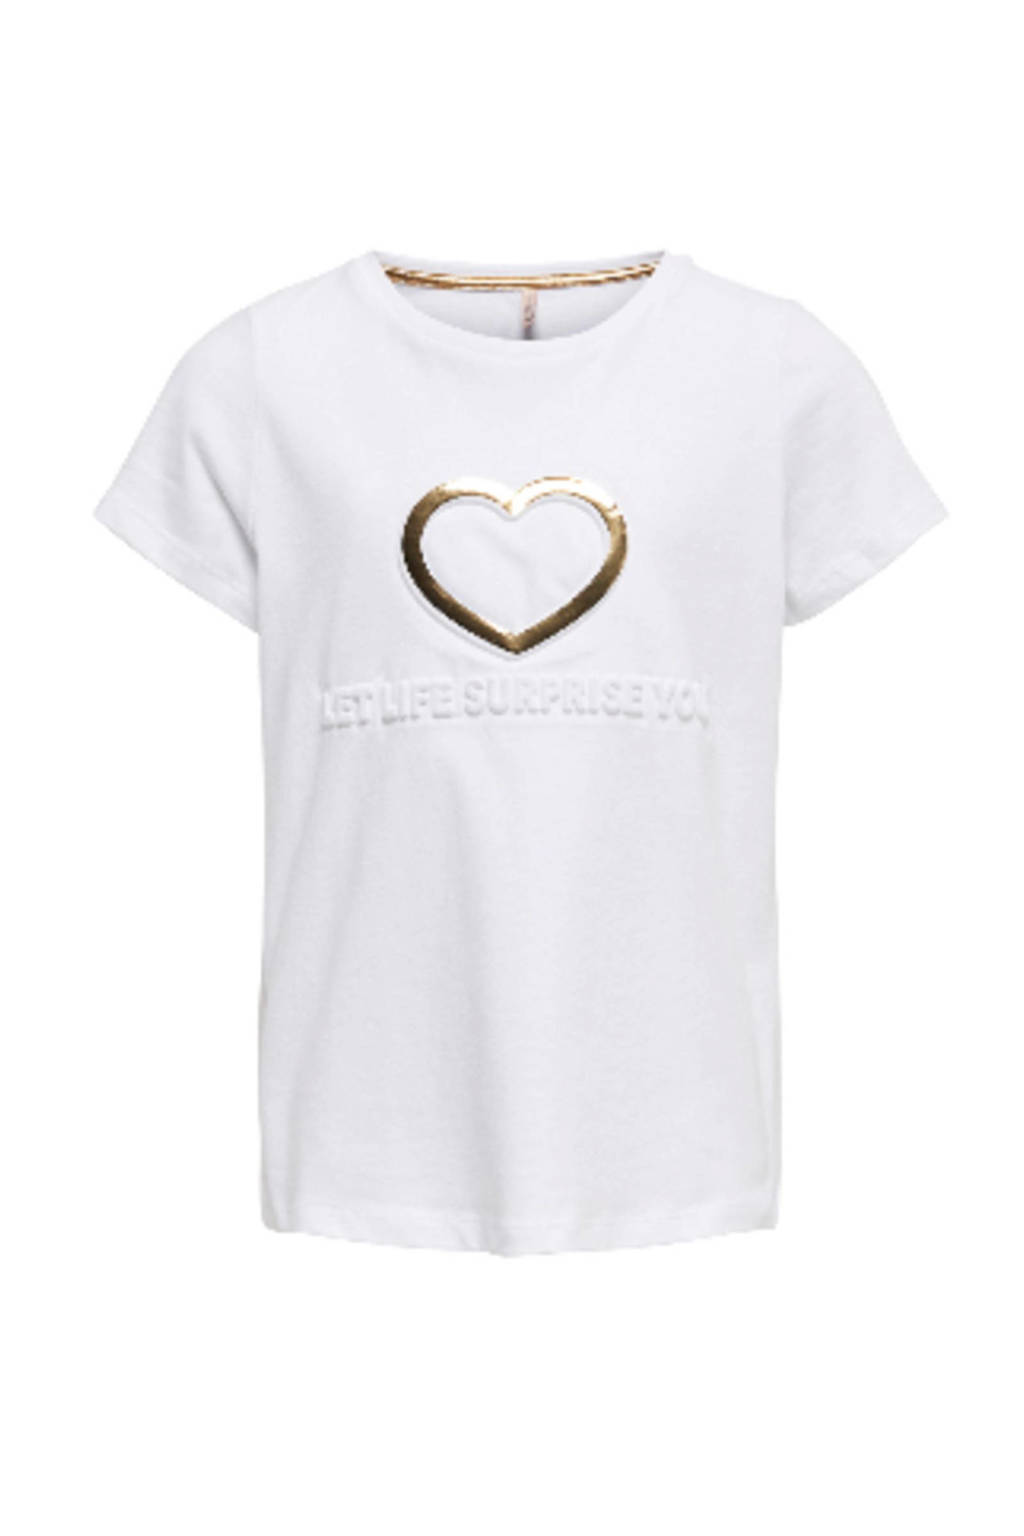 ONLY T-shirt Suvi met tekst wit/goud | wehkamp